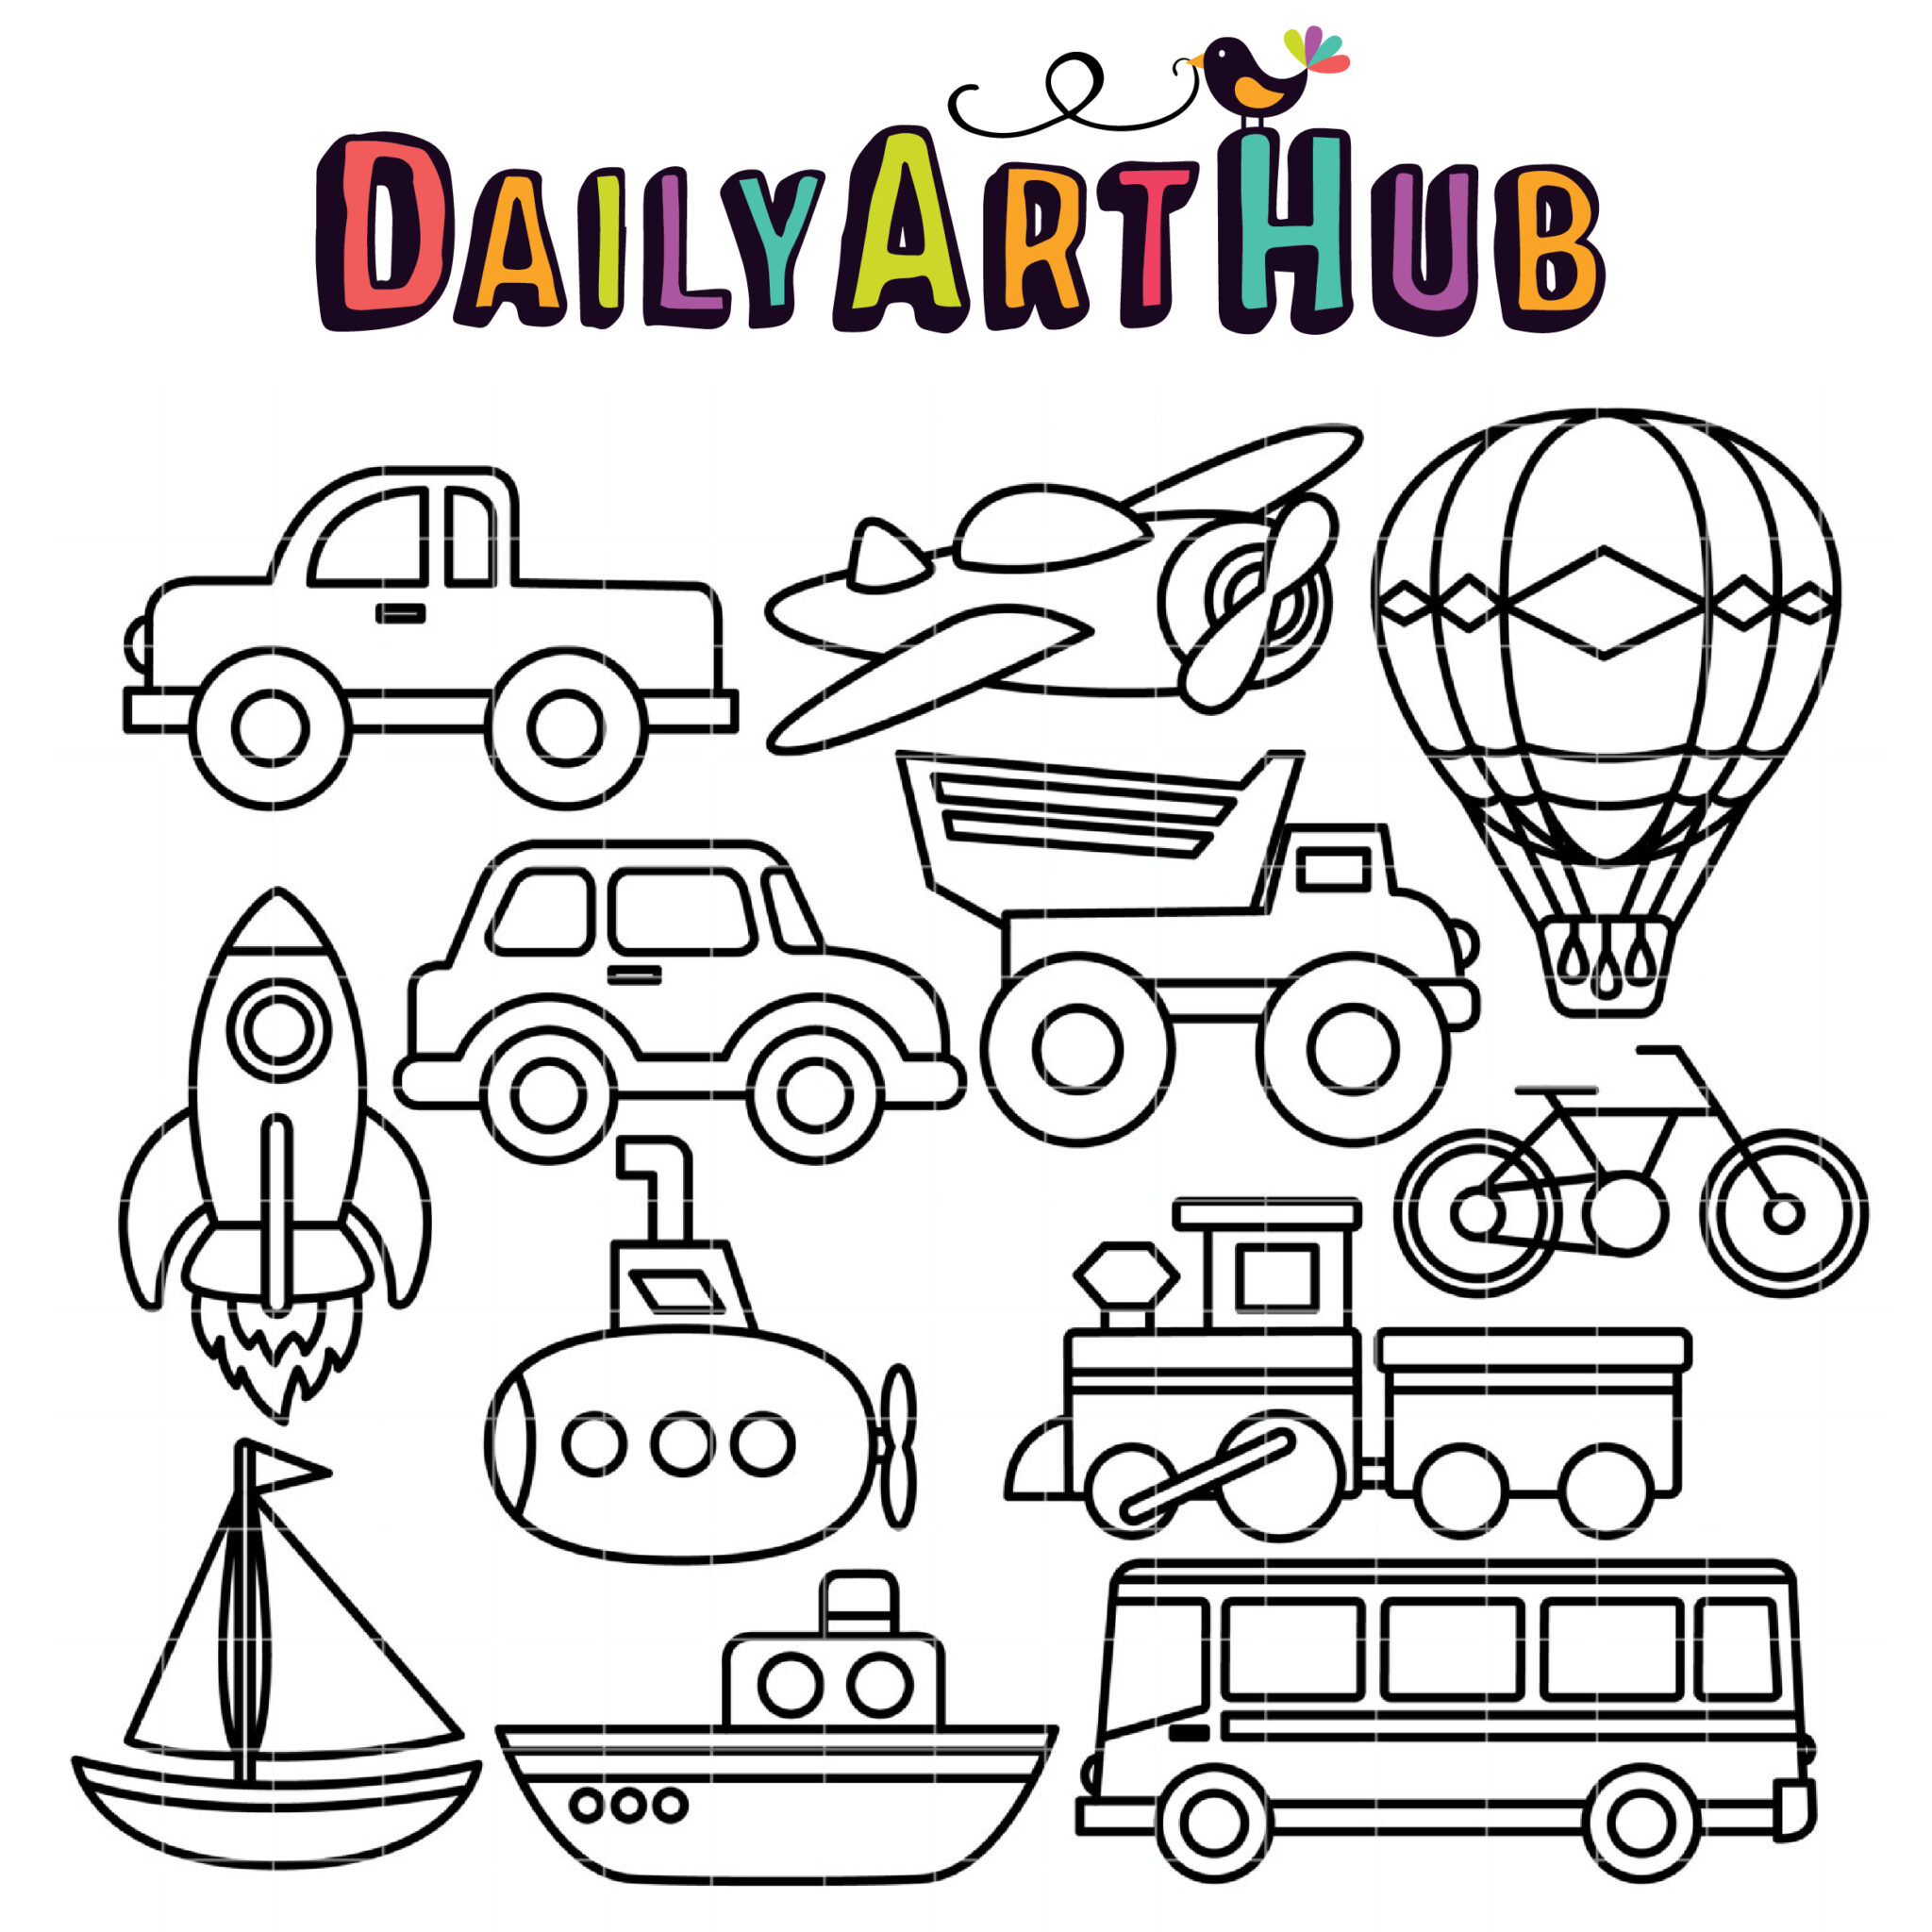 Coloring book transportation clip art set â daily art hub graphics alphabets svg